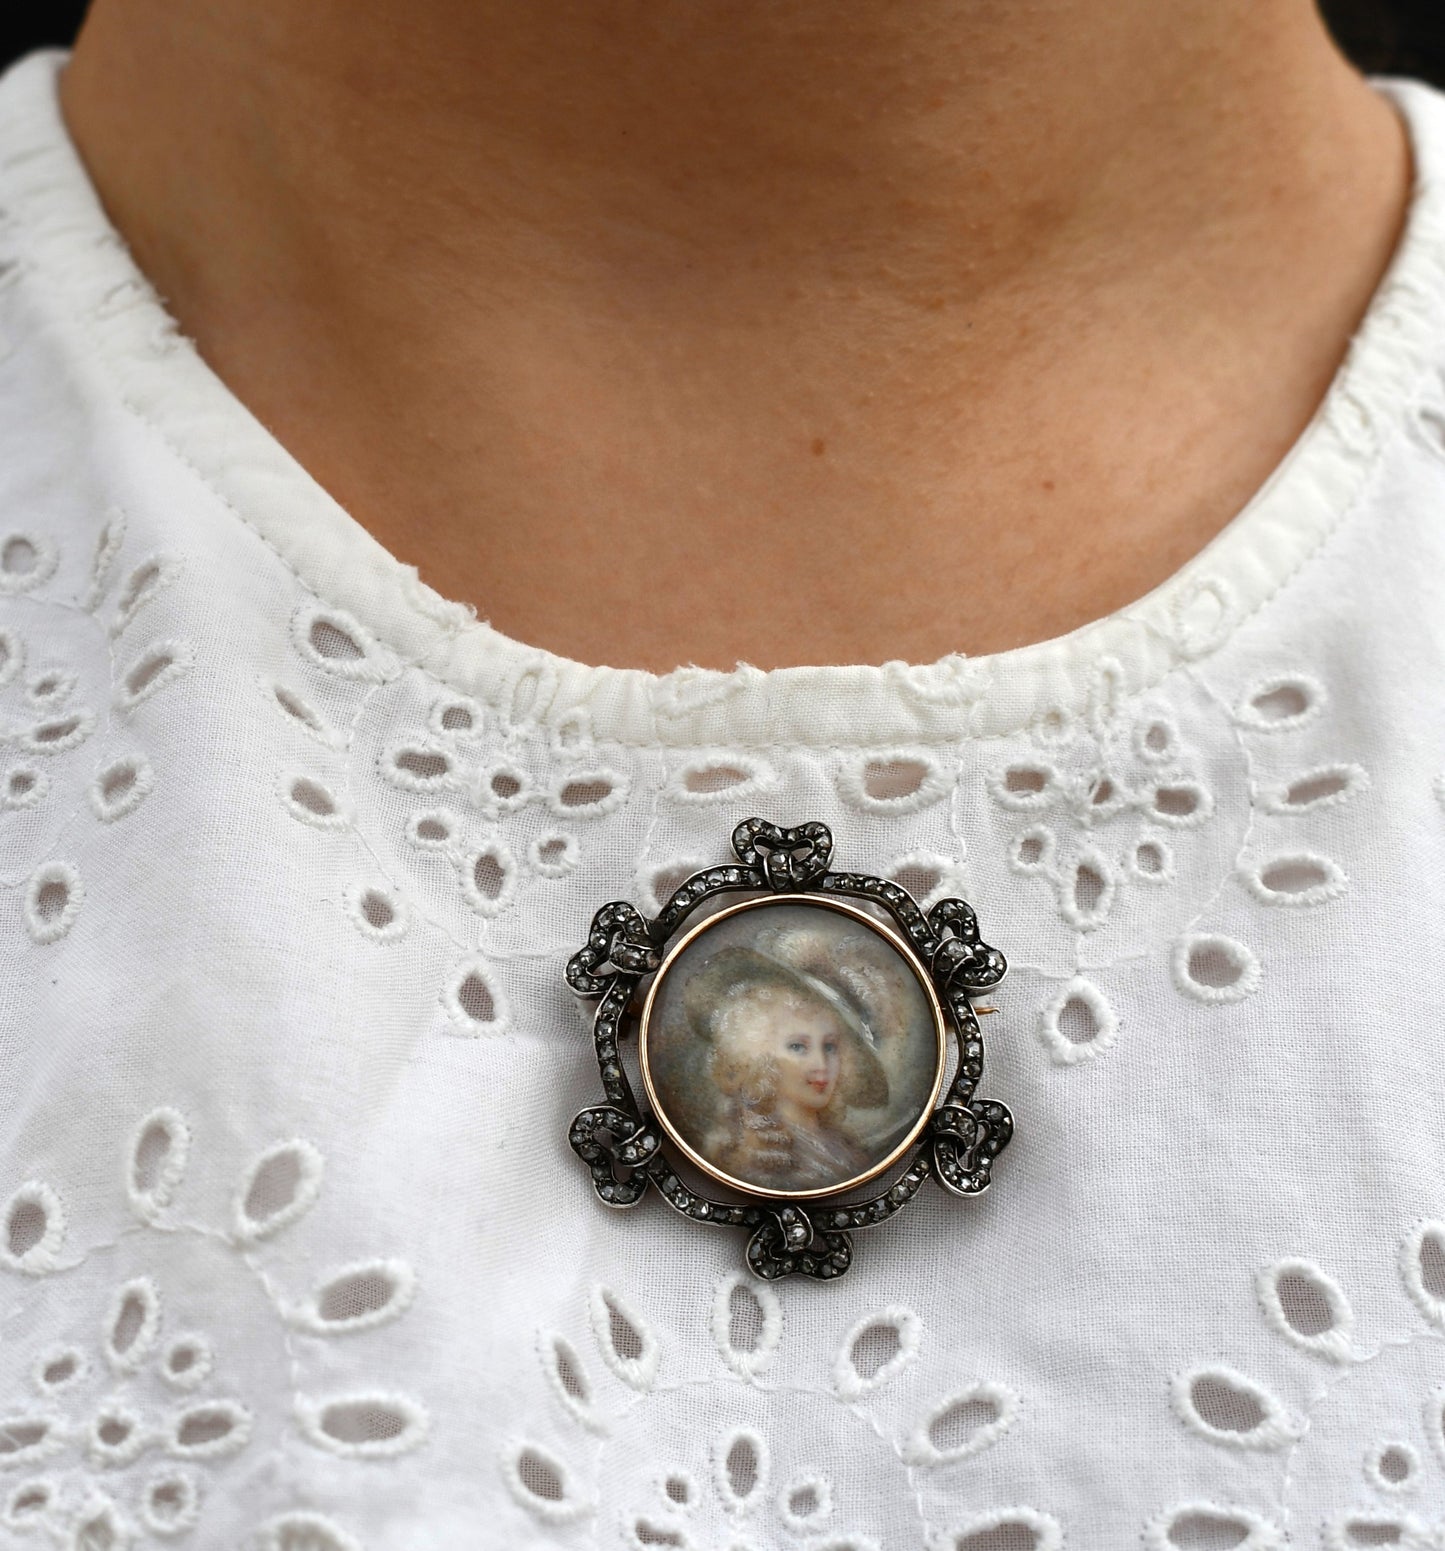 Antique rose cut diamond brooch with miniature portrait, circa 1790